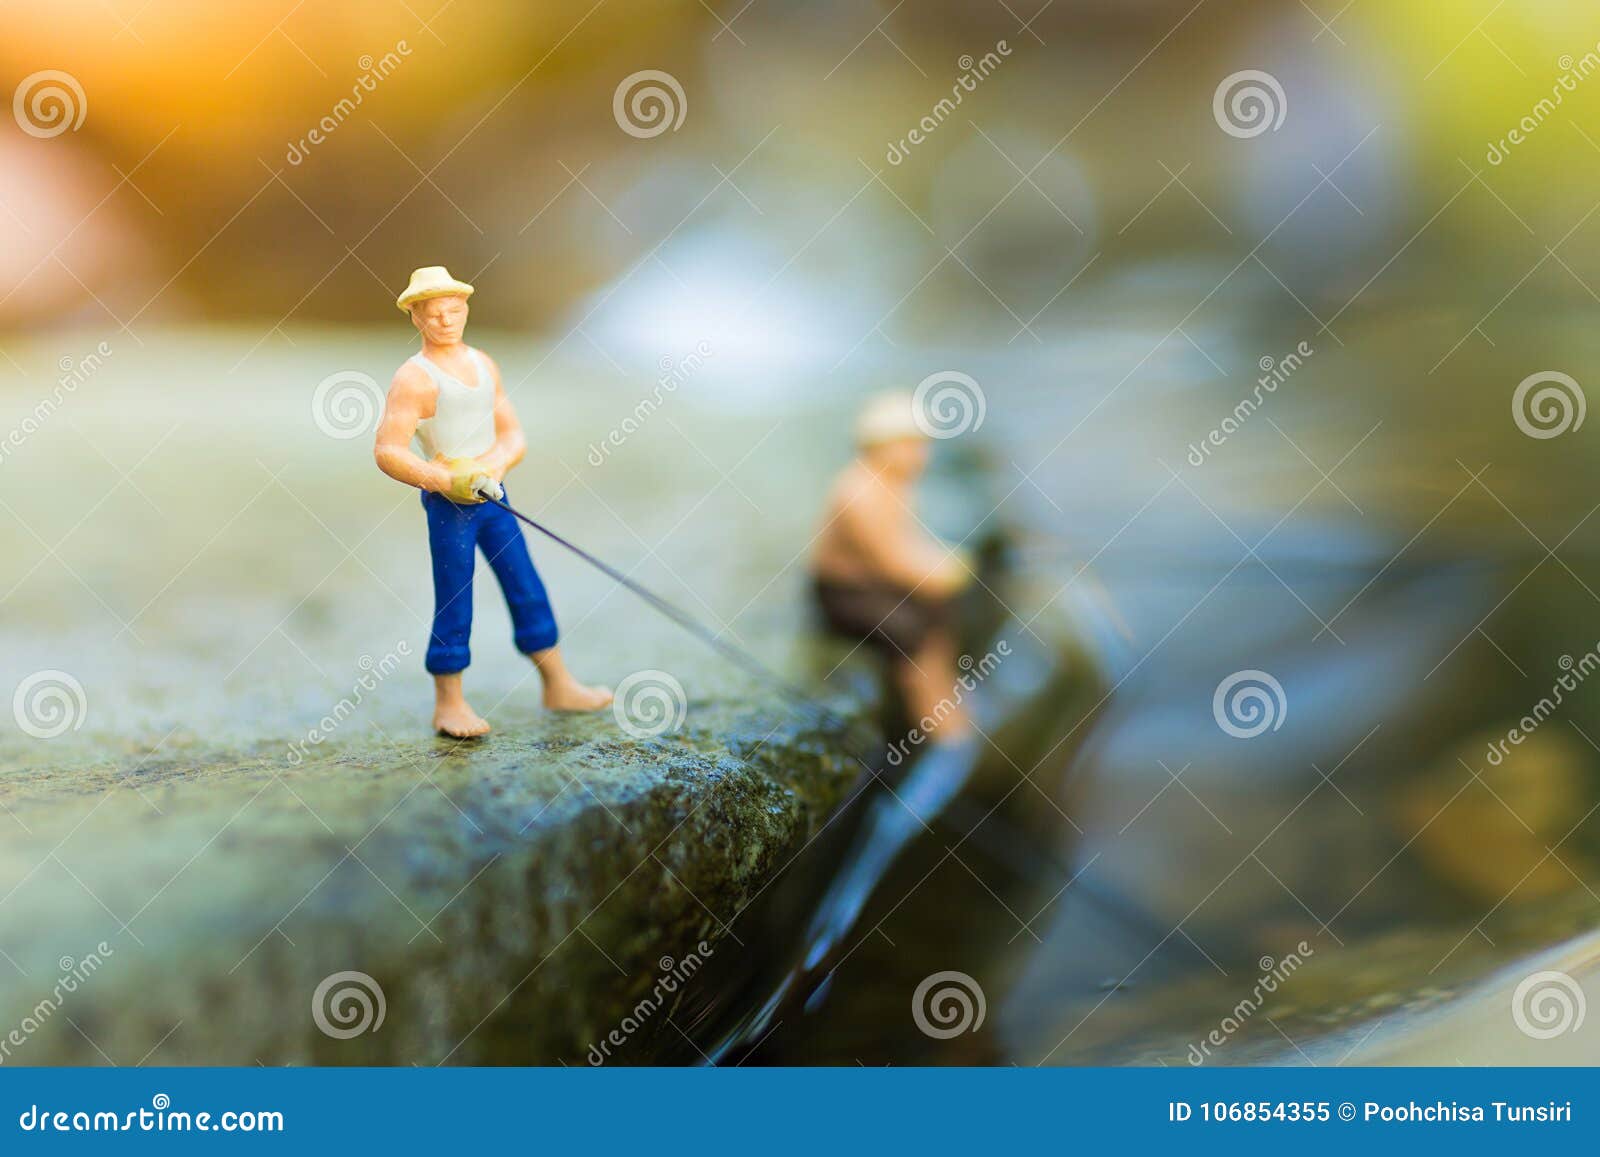 363 Miniature Fisherman Stock Photos - Free & Royalty-Free Stock